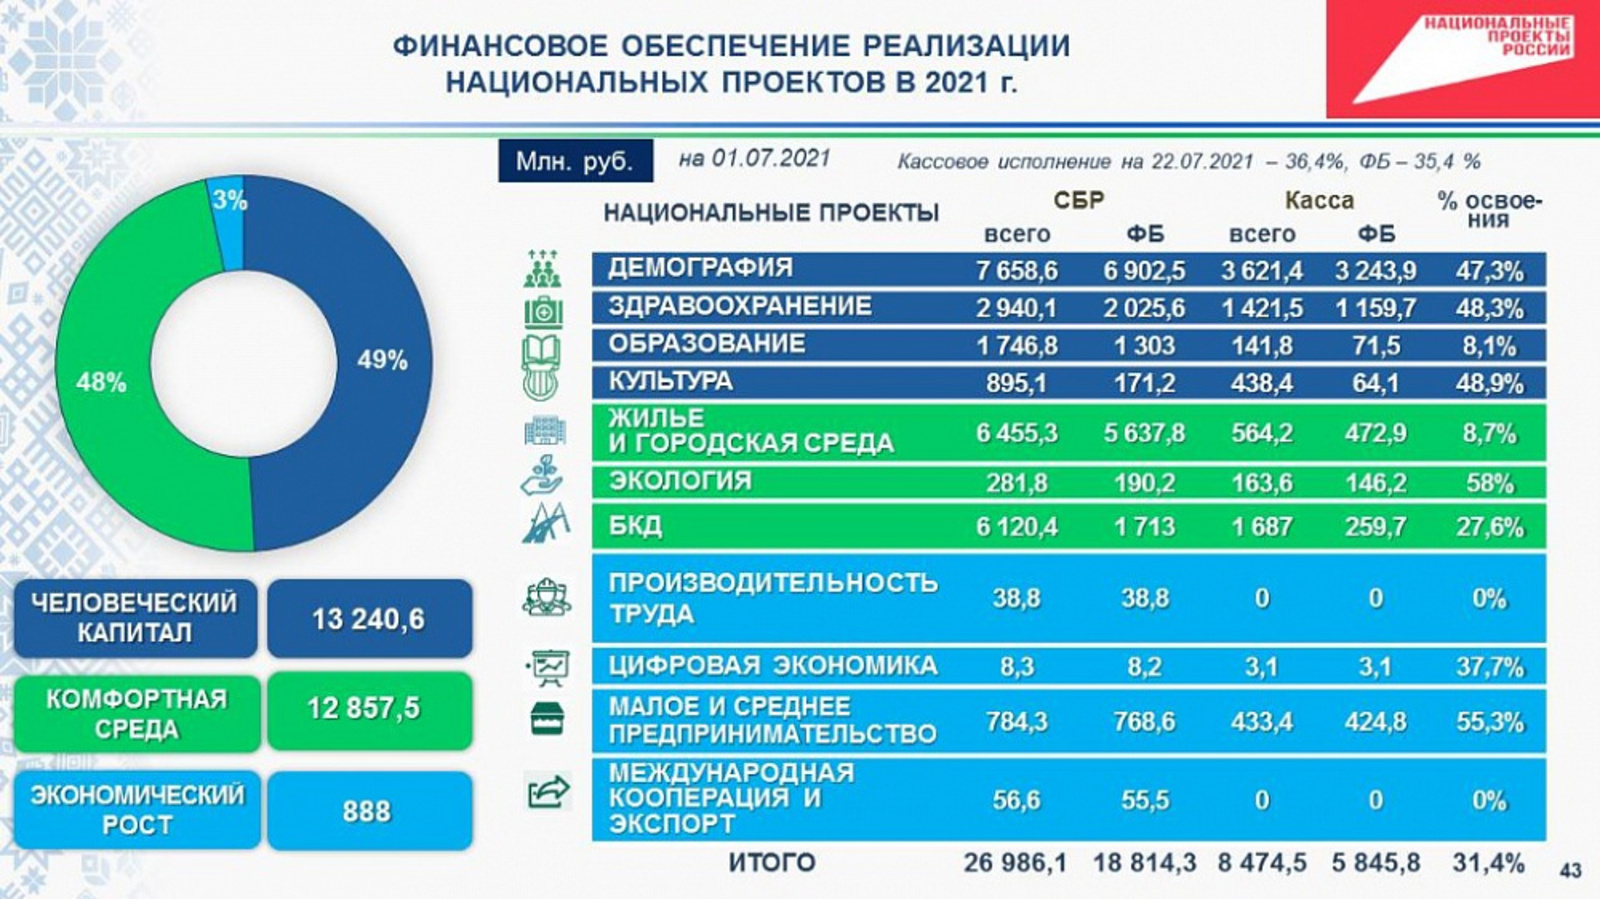 В 2021 году на реализацию нацпроектов в Башкортостане направят 27 млрд рублей